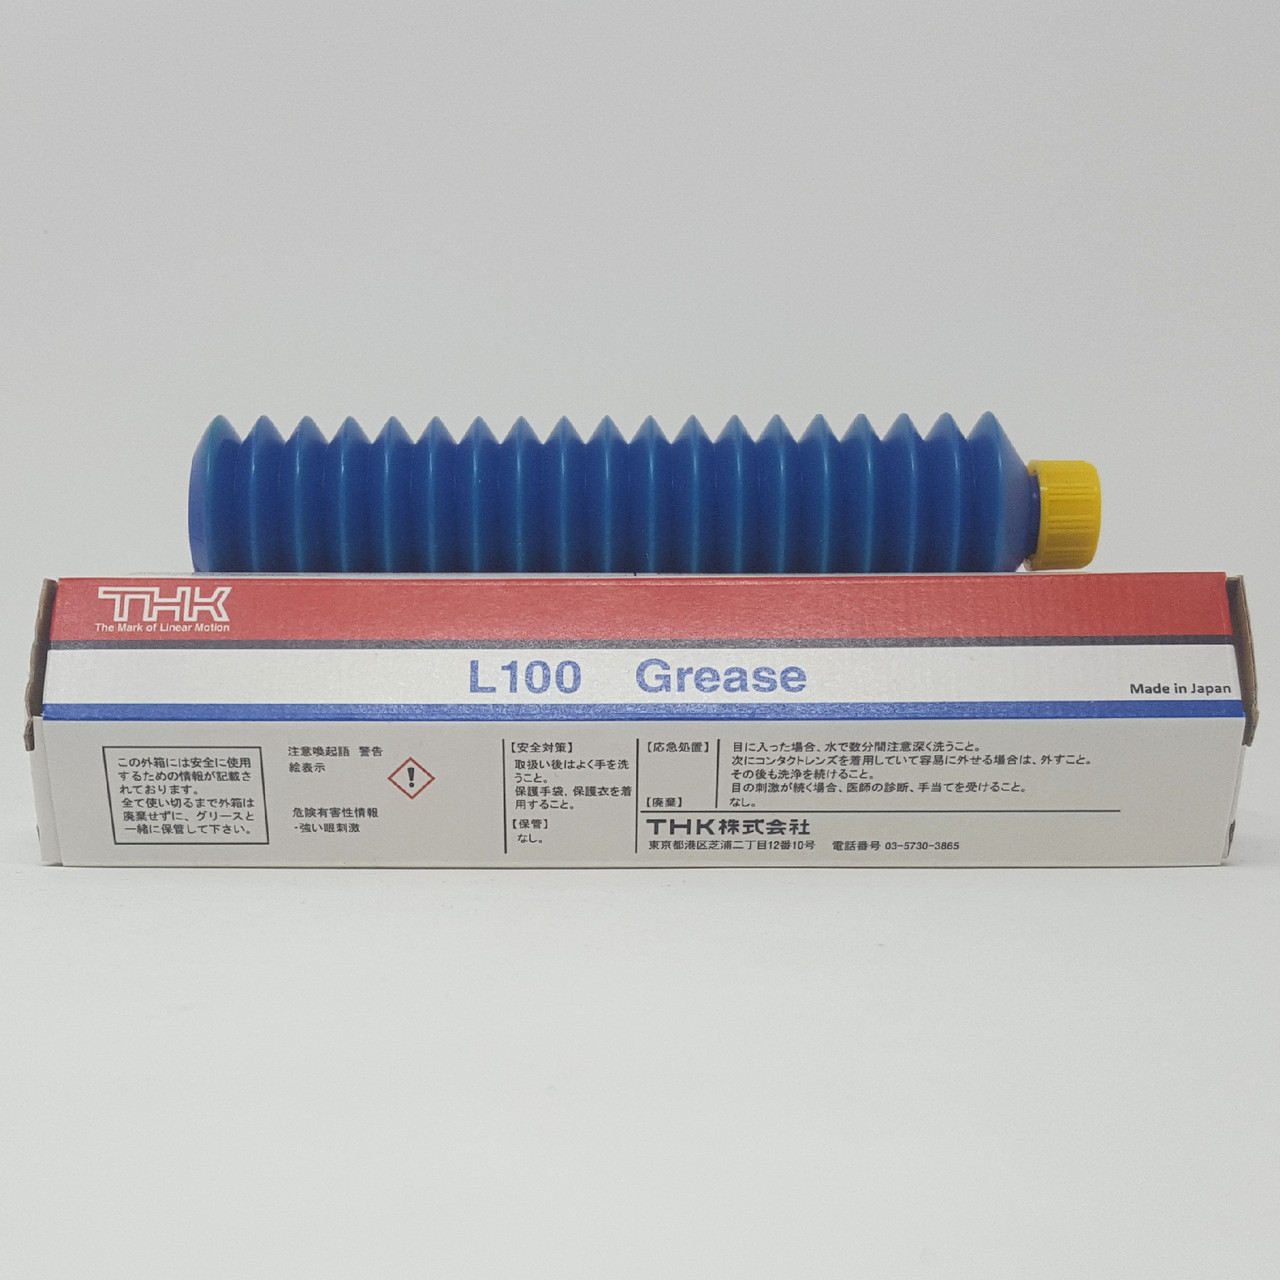 THK L100 Grease Cartridge (70g)